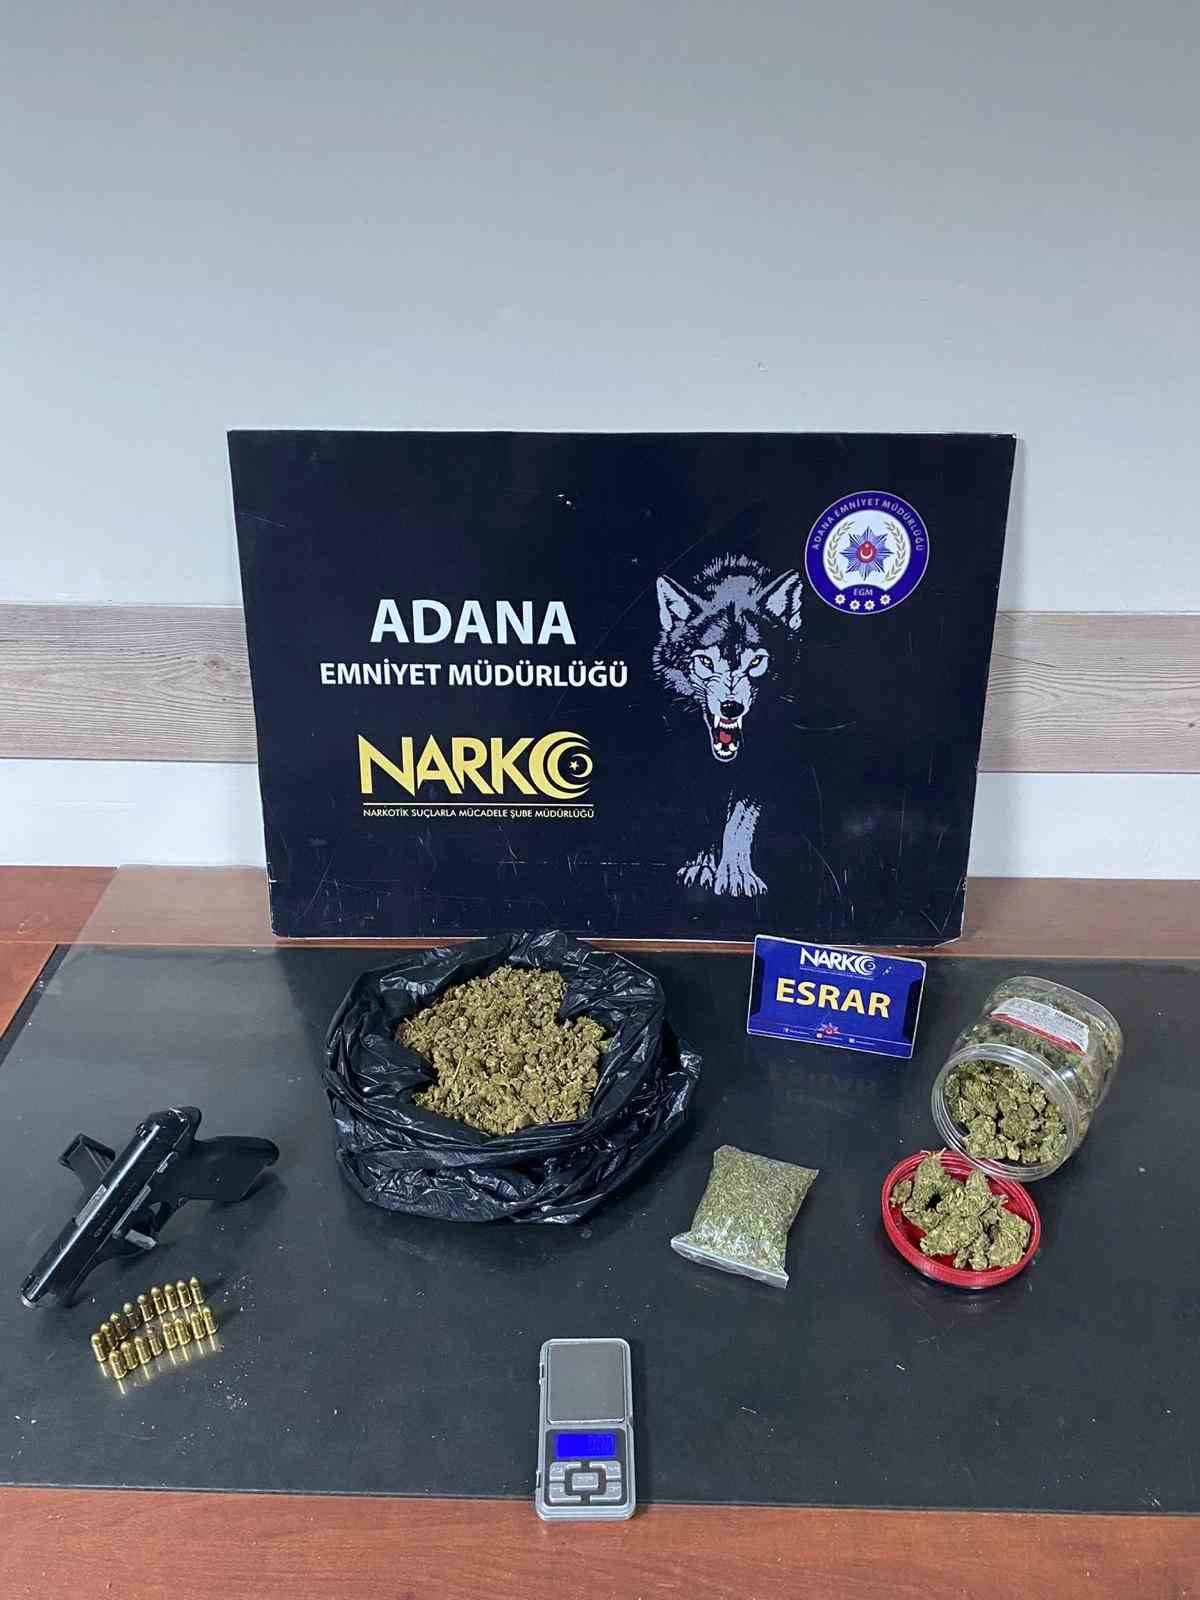 Adana’da 4 kilo metamfetamin ele geçirildi: 4 kişi tutuklandı
